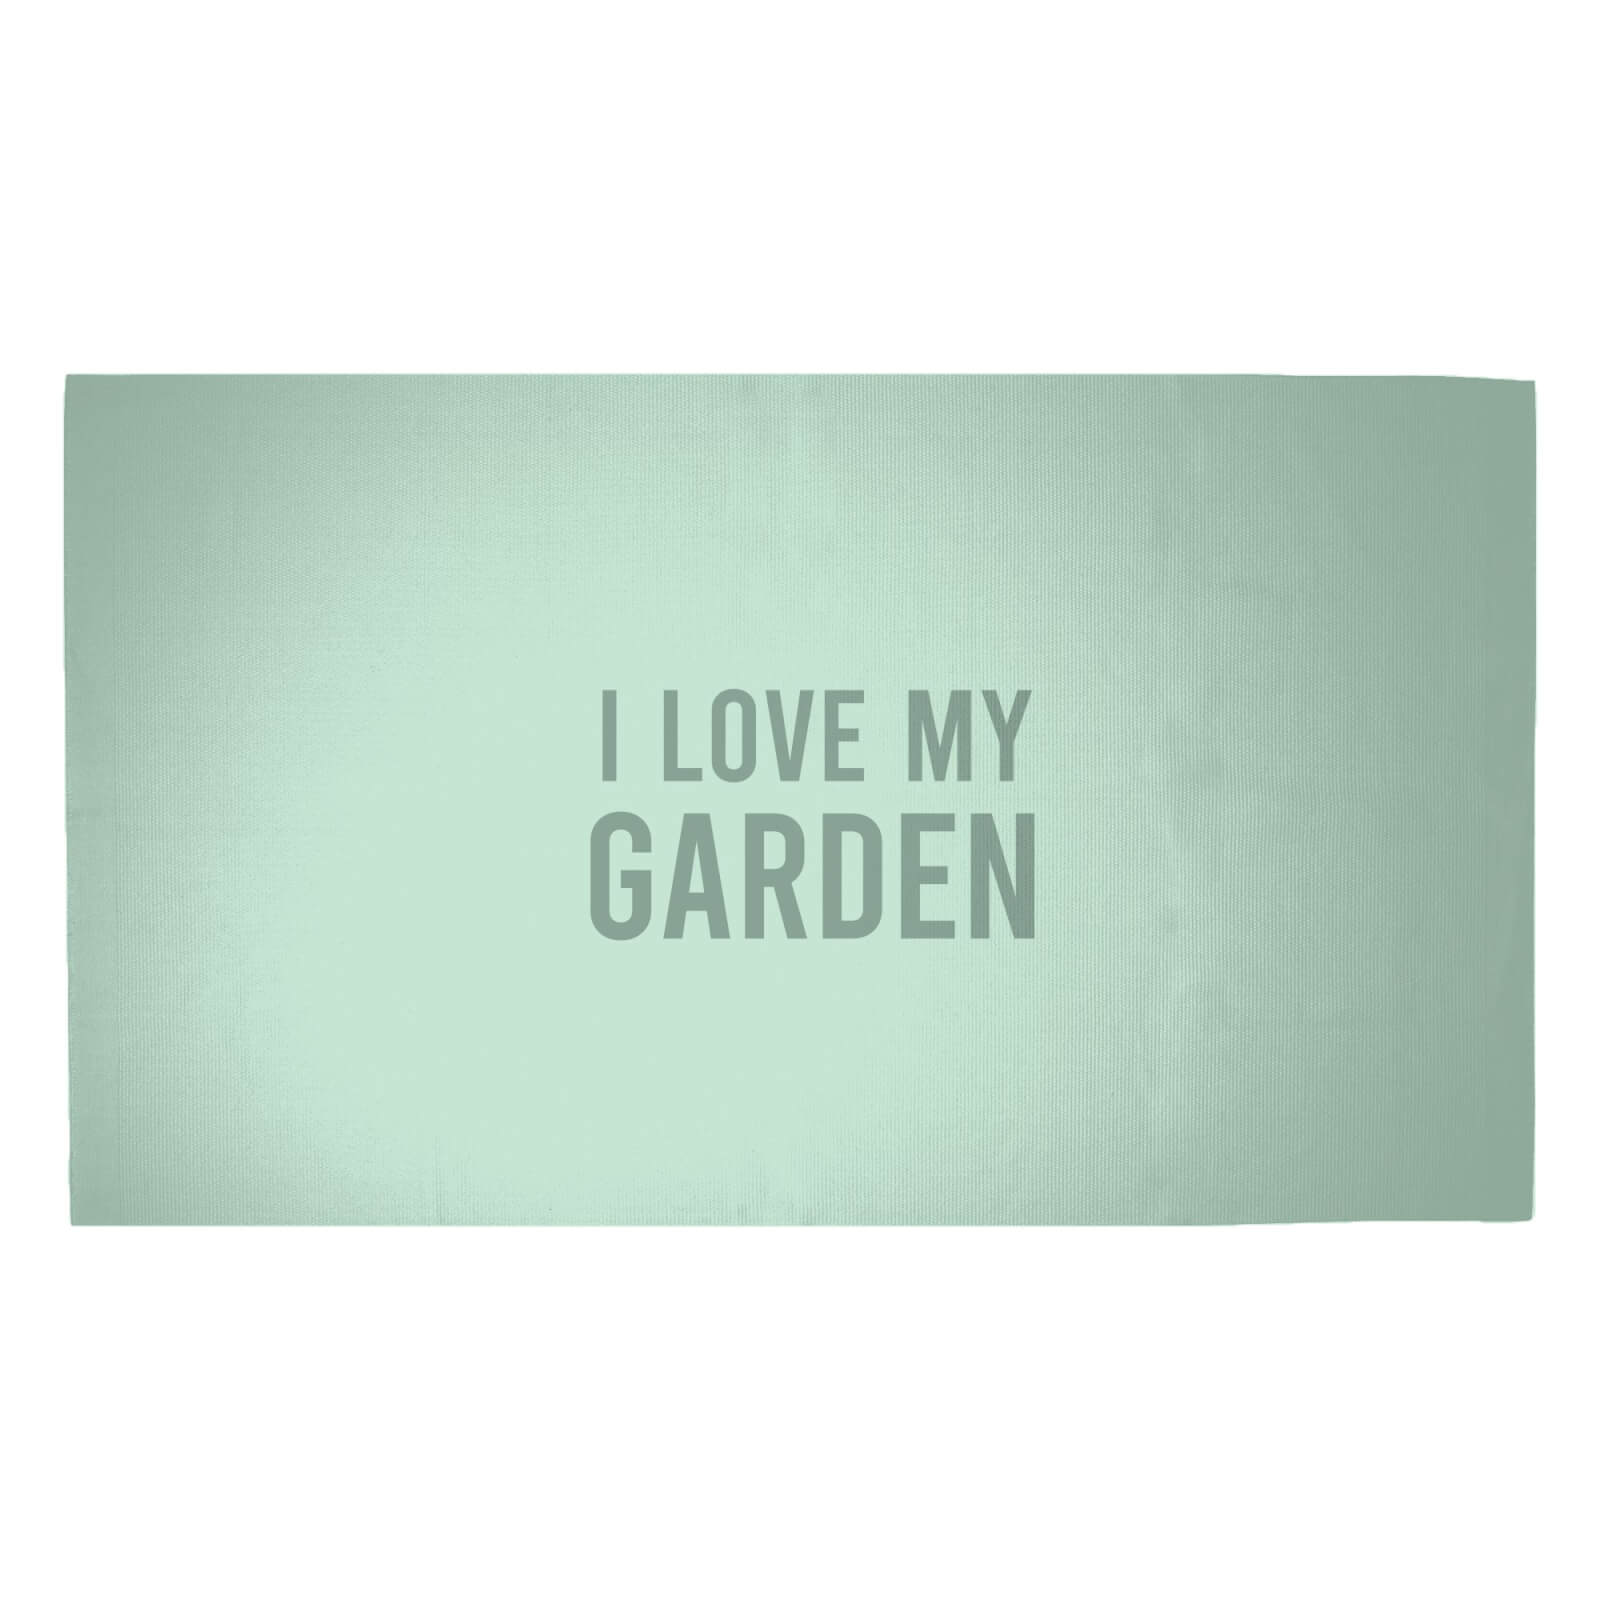 I Love My Garden Woven Rug - Medium